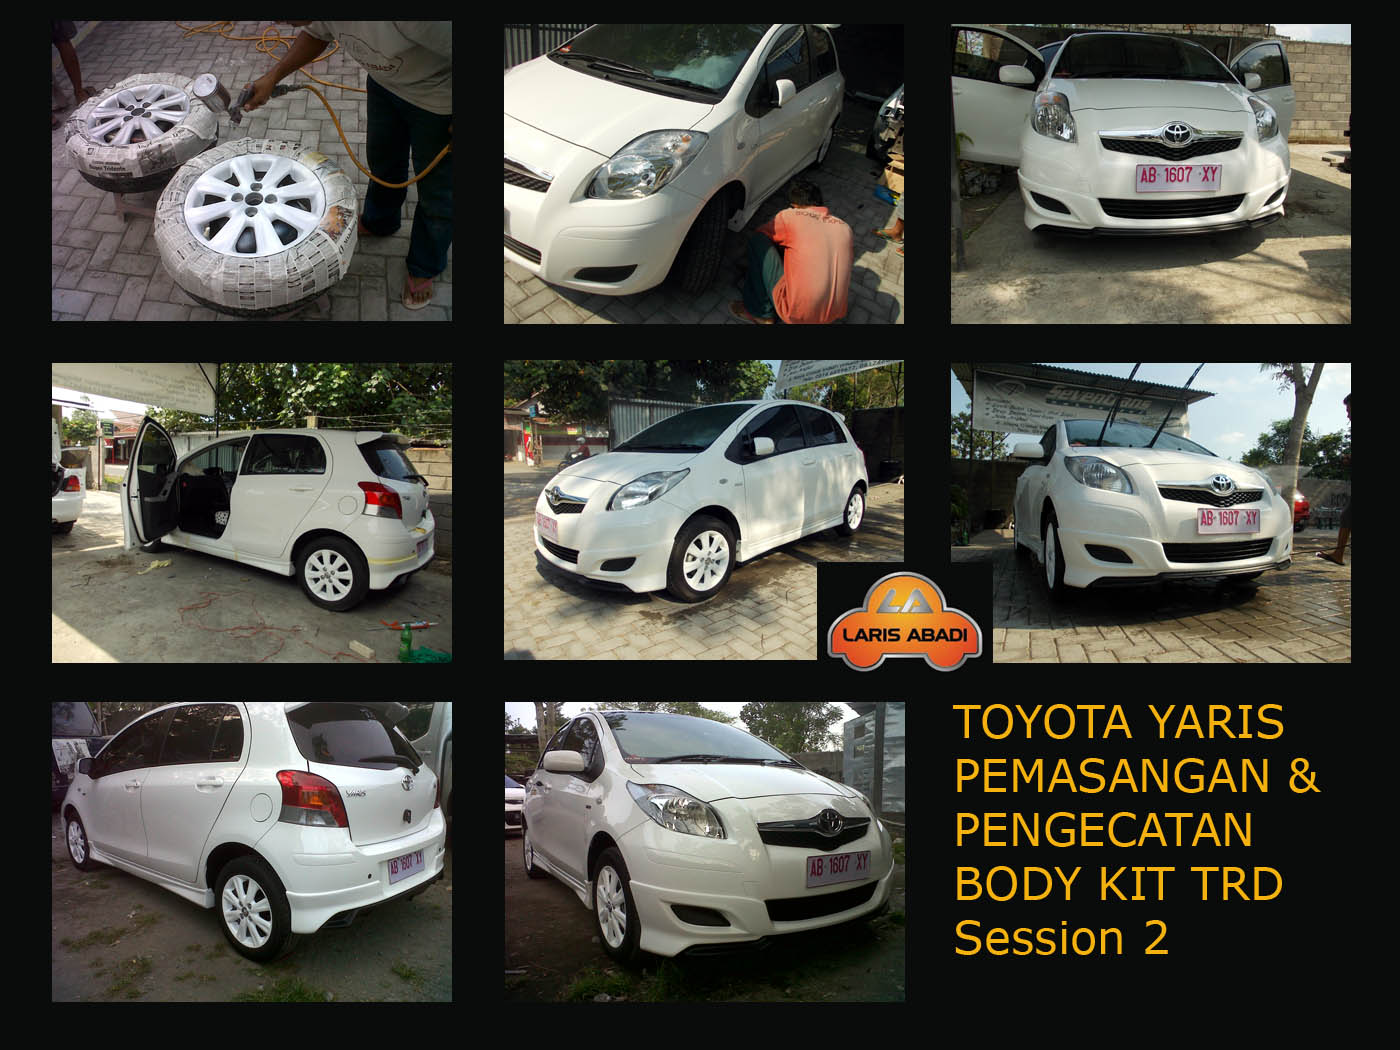 Toyota Yaris 2012 Pemasangan Dan Pengecatan Bodykit TRD Laris Abadi